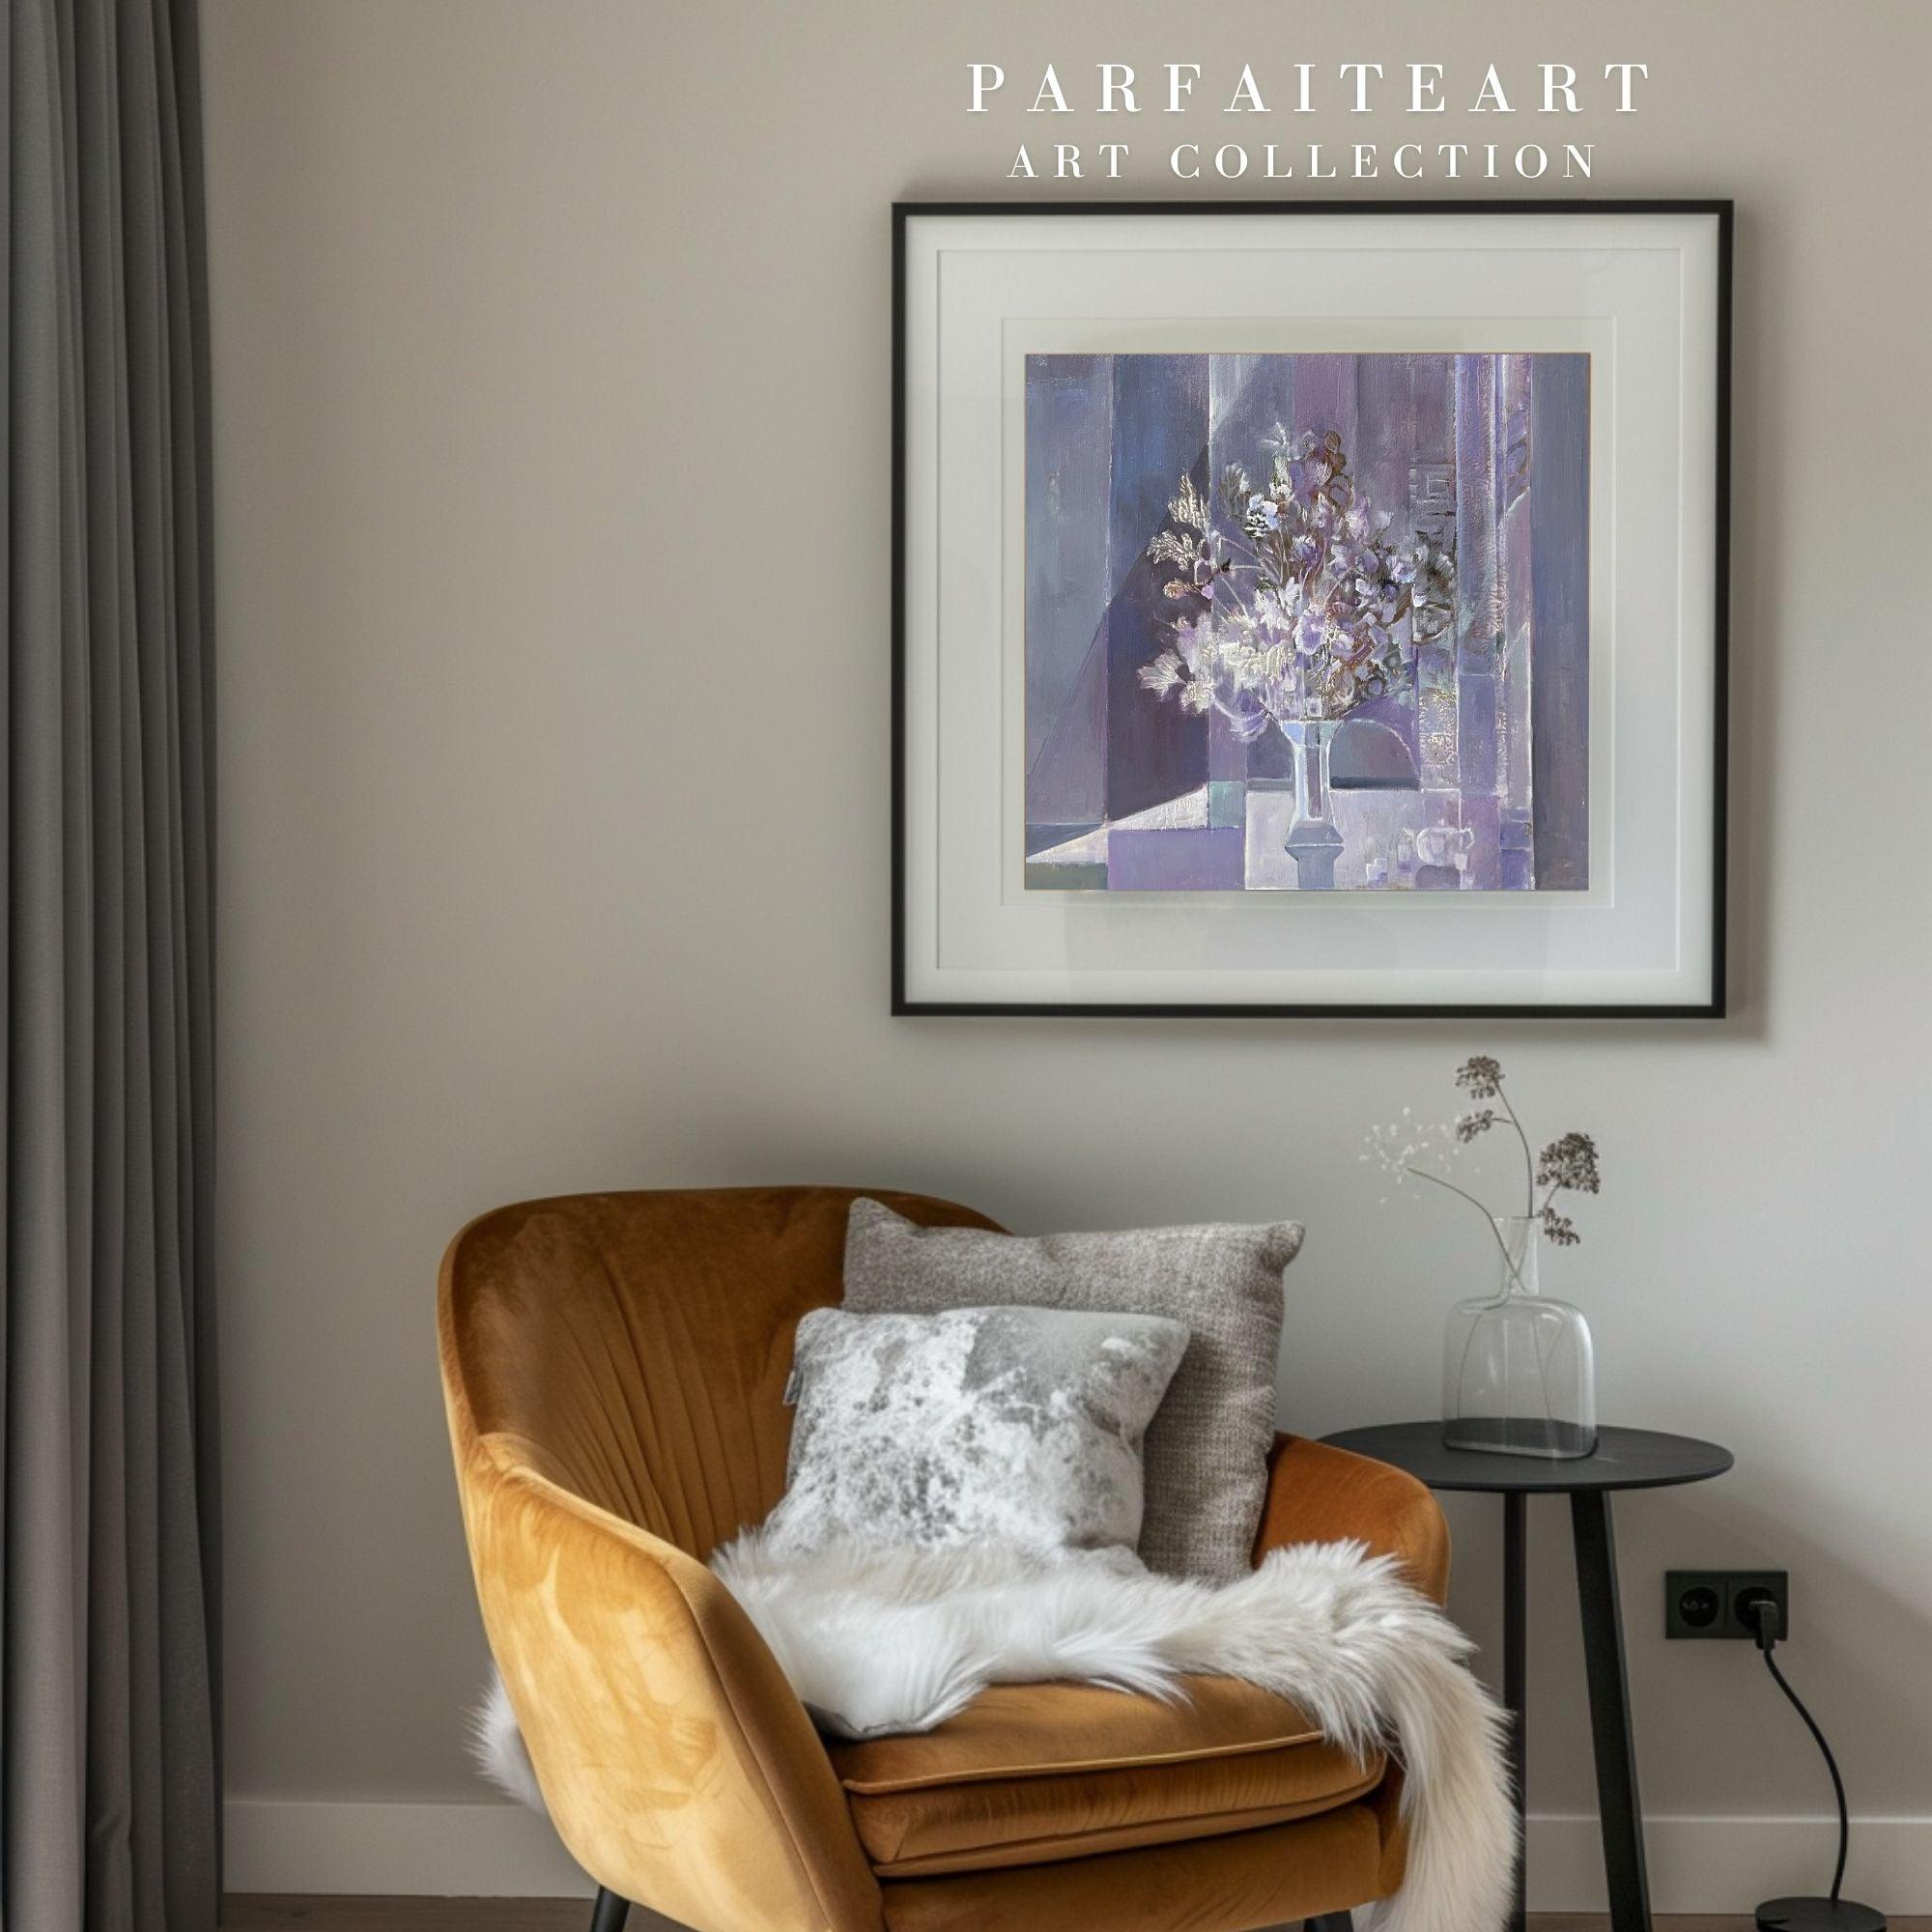 Original Painting,Handmade,Canvas Print,Abstract Art,Botany,Art Decor For Living Room O6 - ParfaiteArt